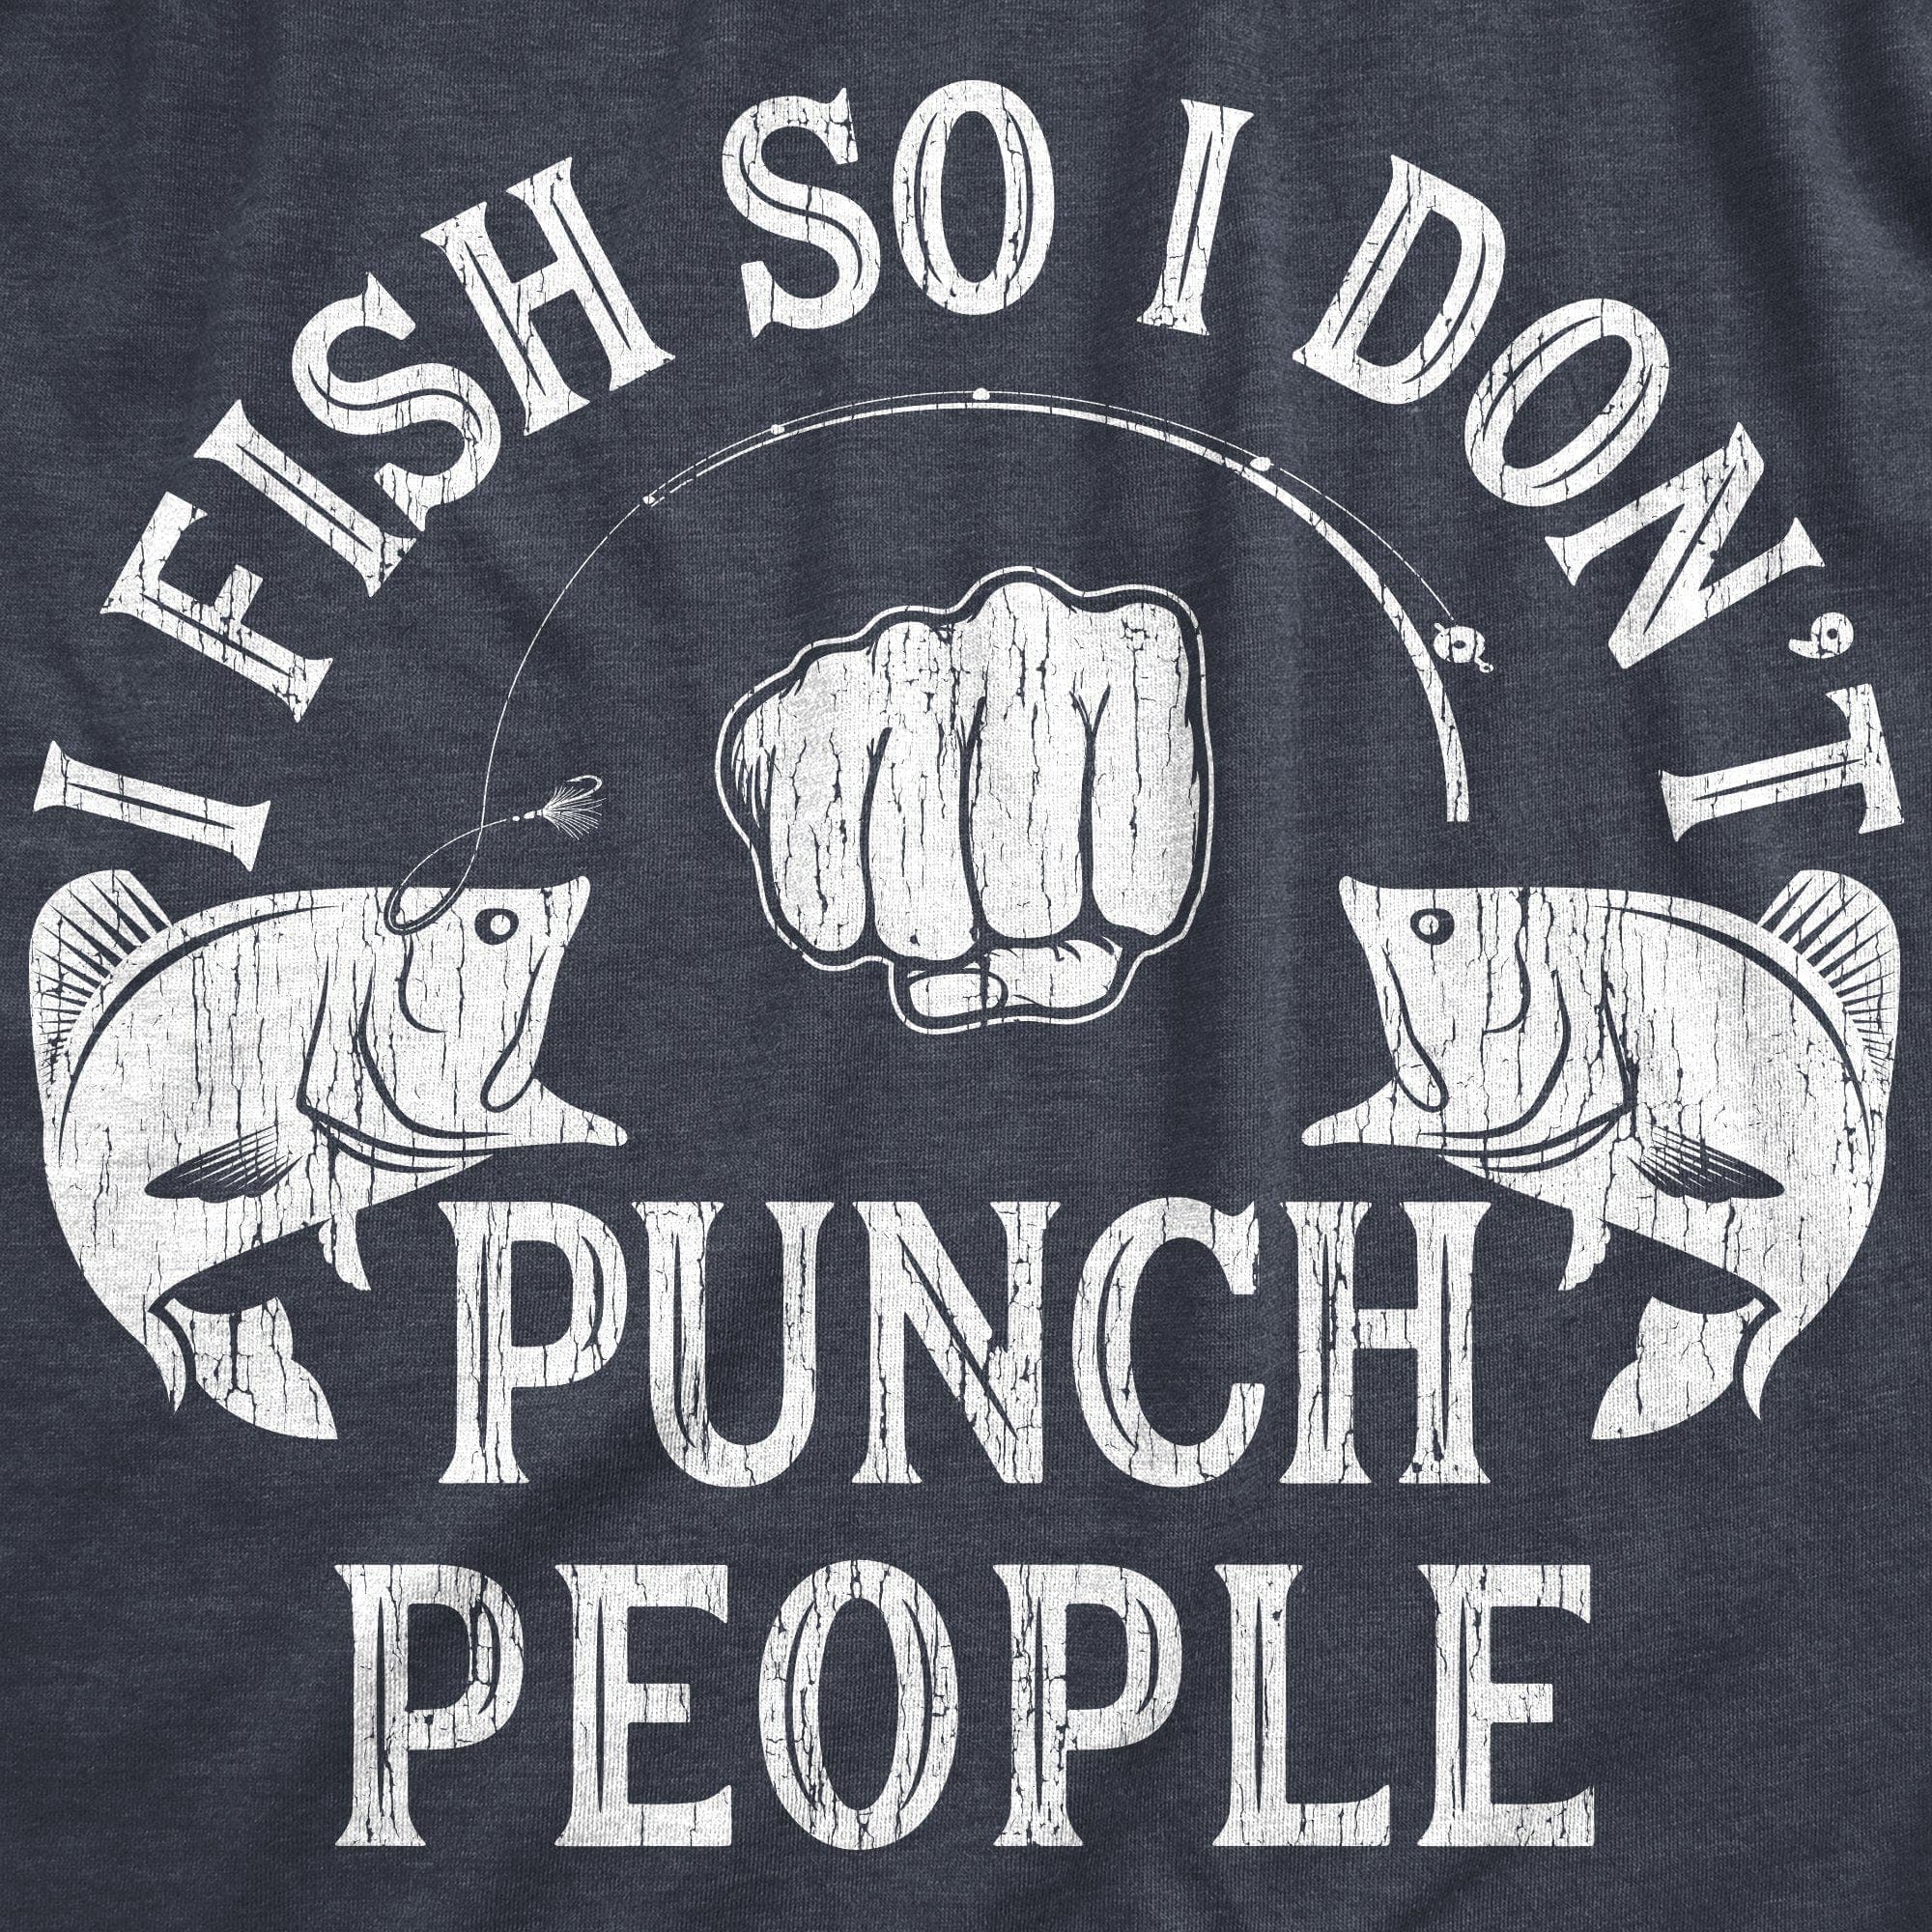 I Fish So I Don't Punch People Men's Tshirt - Crazy Dog T-Shirts